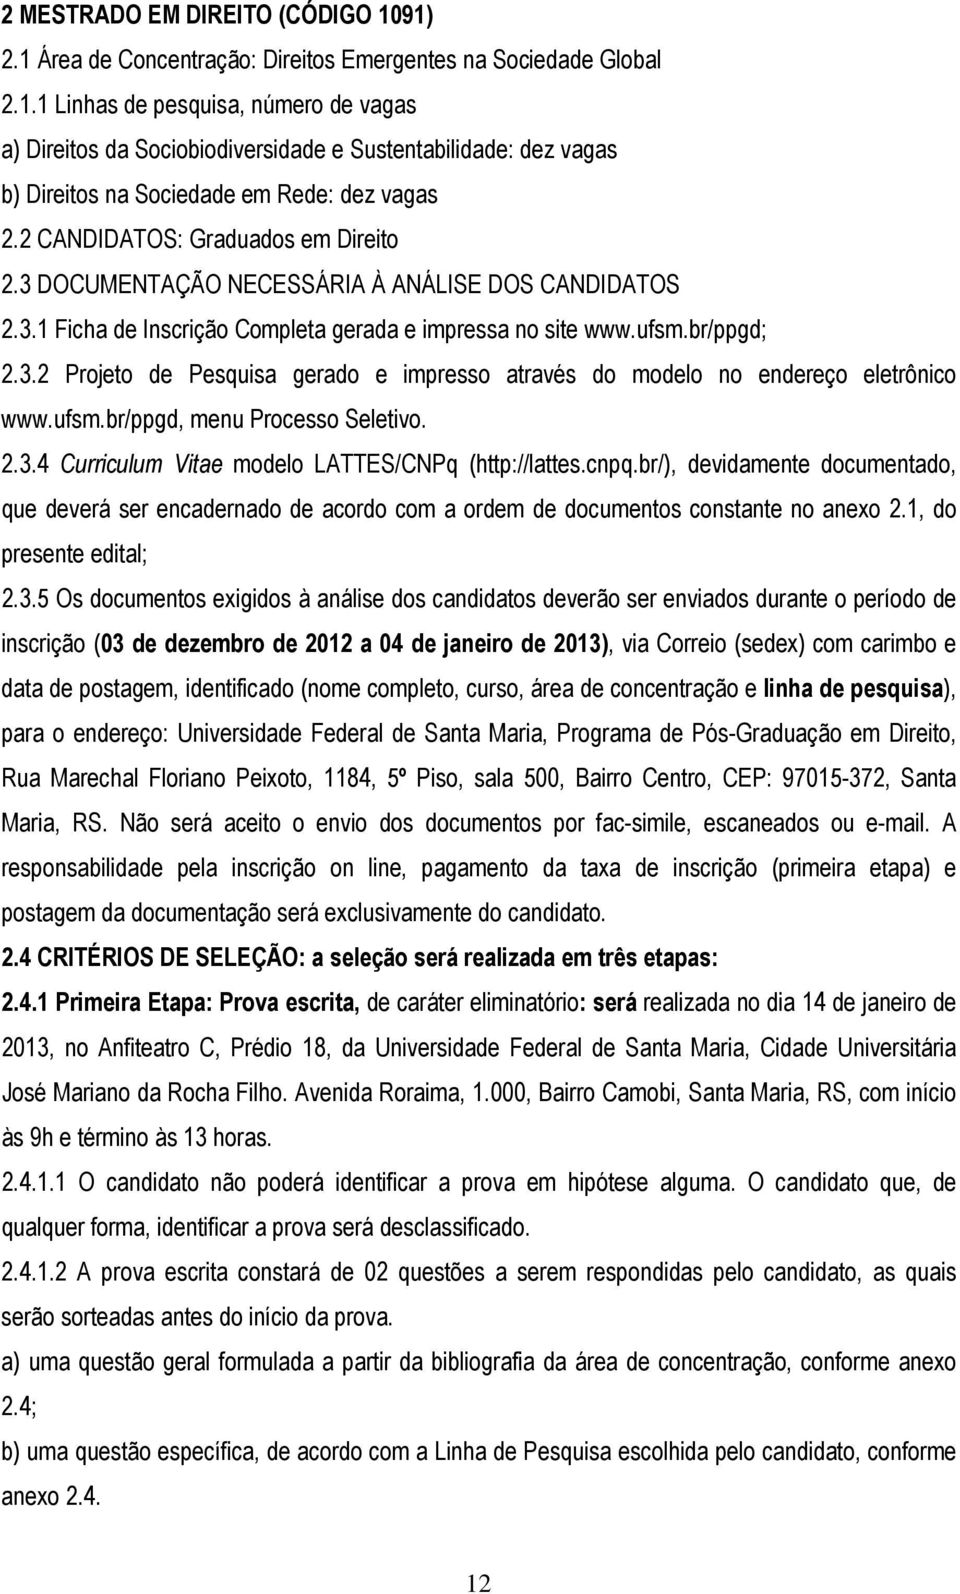 ufsm.br/ppgd, menu Processo Seletivo. 2.3.4 Curriculum Vitae modelo LATTES/CNPq (http://lattes.cnpq.